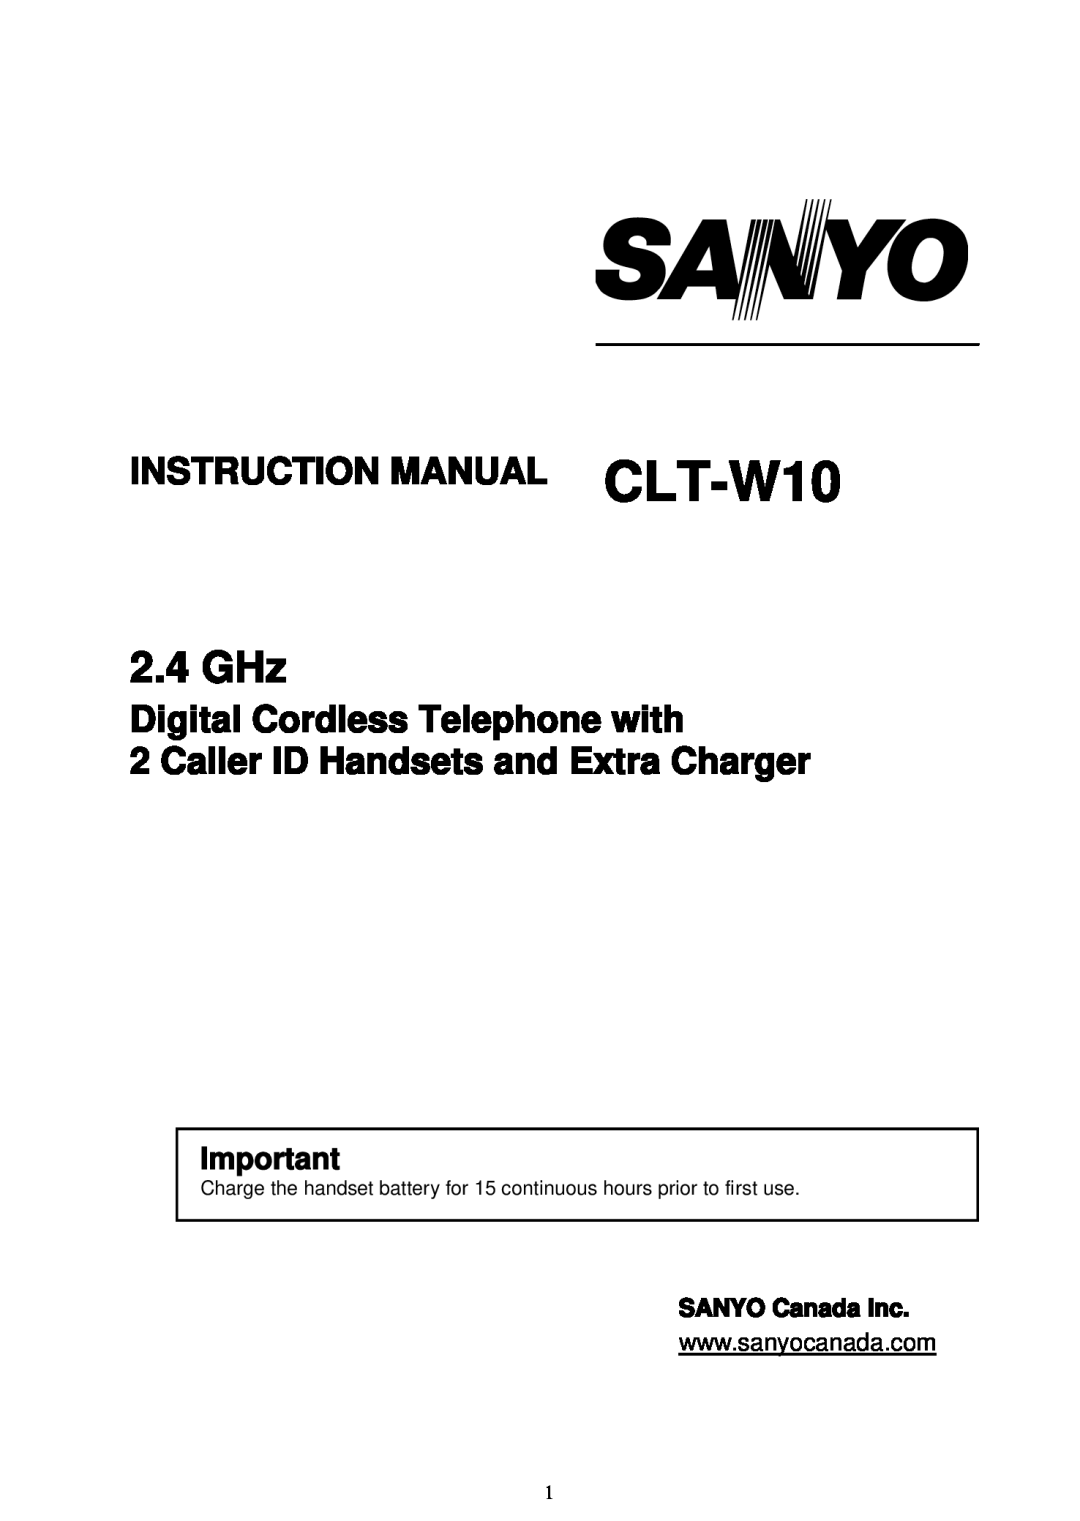 Sanyo LNS-W10 instruction manual SANYO Canada Inc, 2.4 GHz, INSTRUCTION MANUAL CLT-W10, Digital Cordless Telephone with 